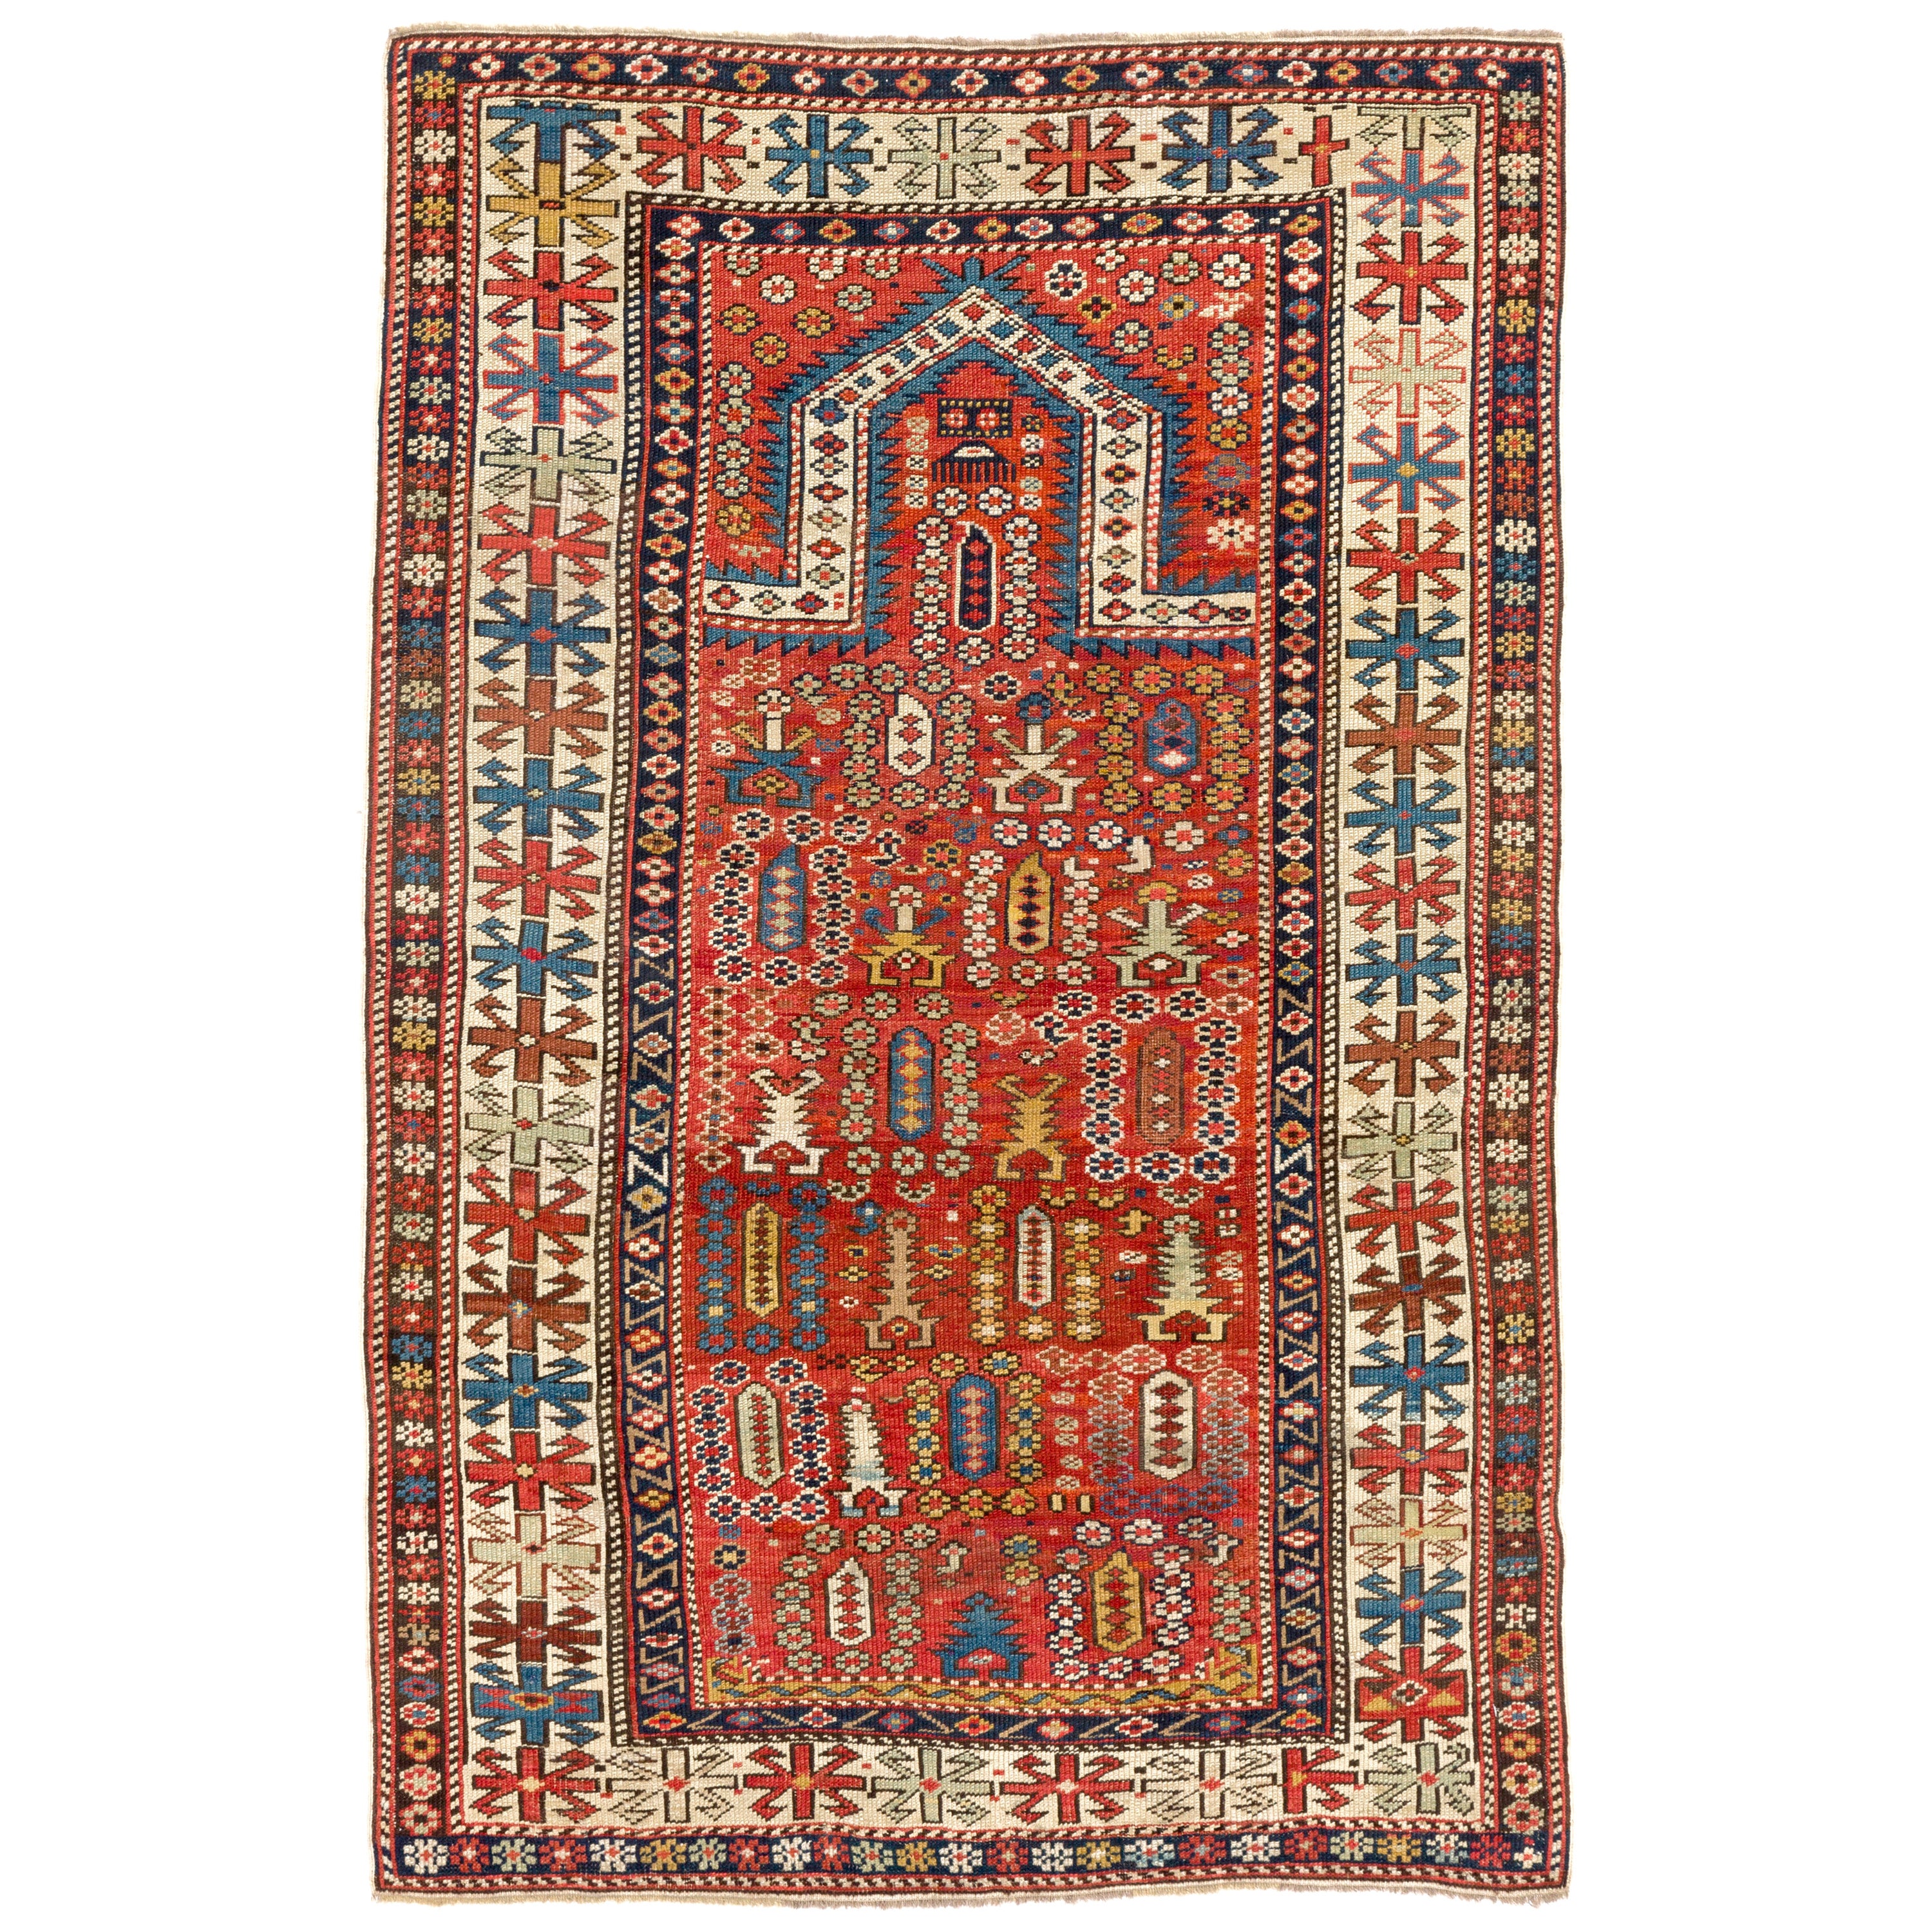 3'x4'9'' Antique Caucasian Shirvan Prayer Rug For Sale